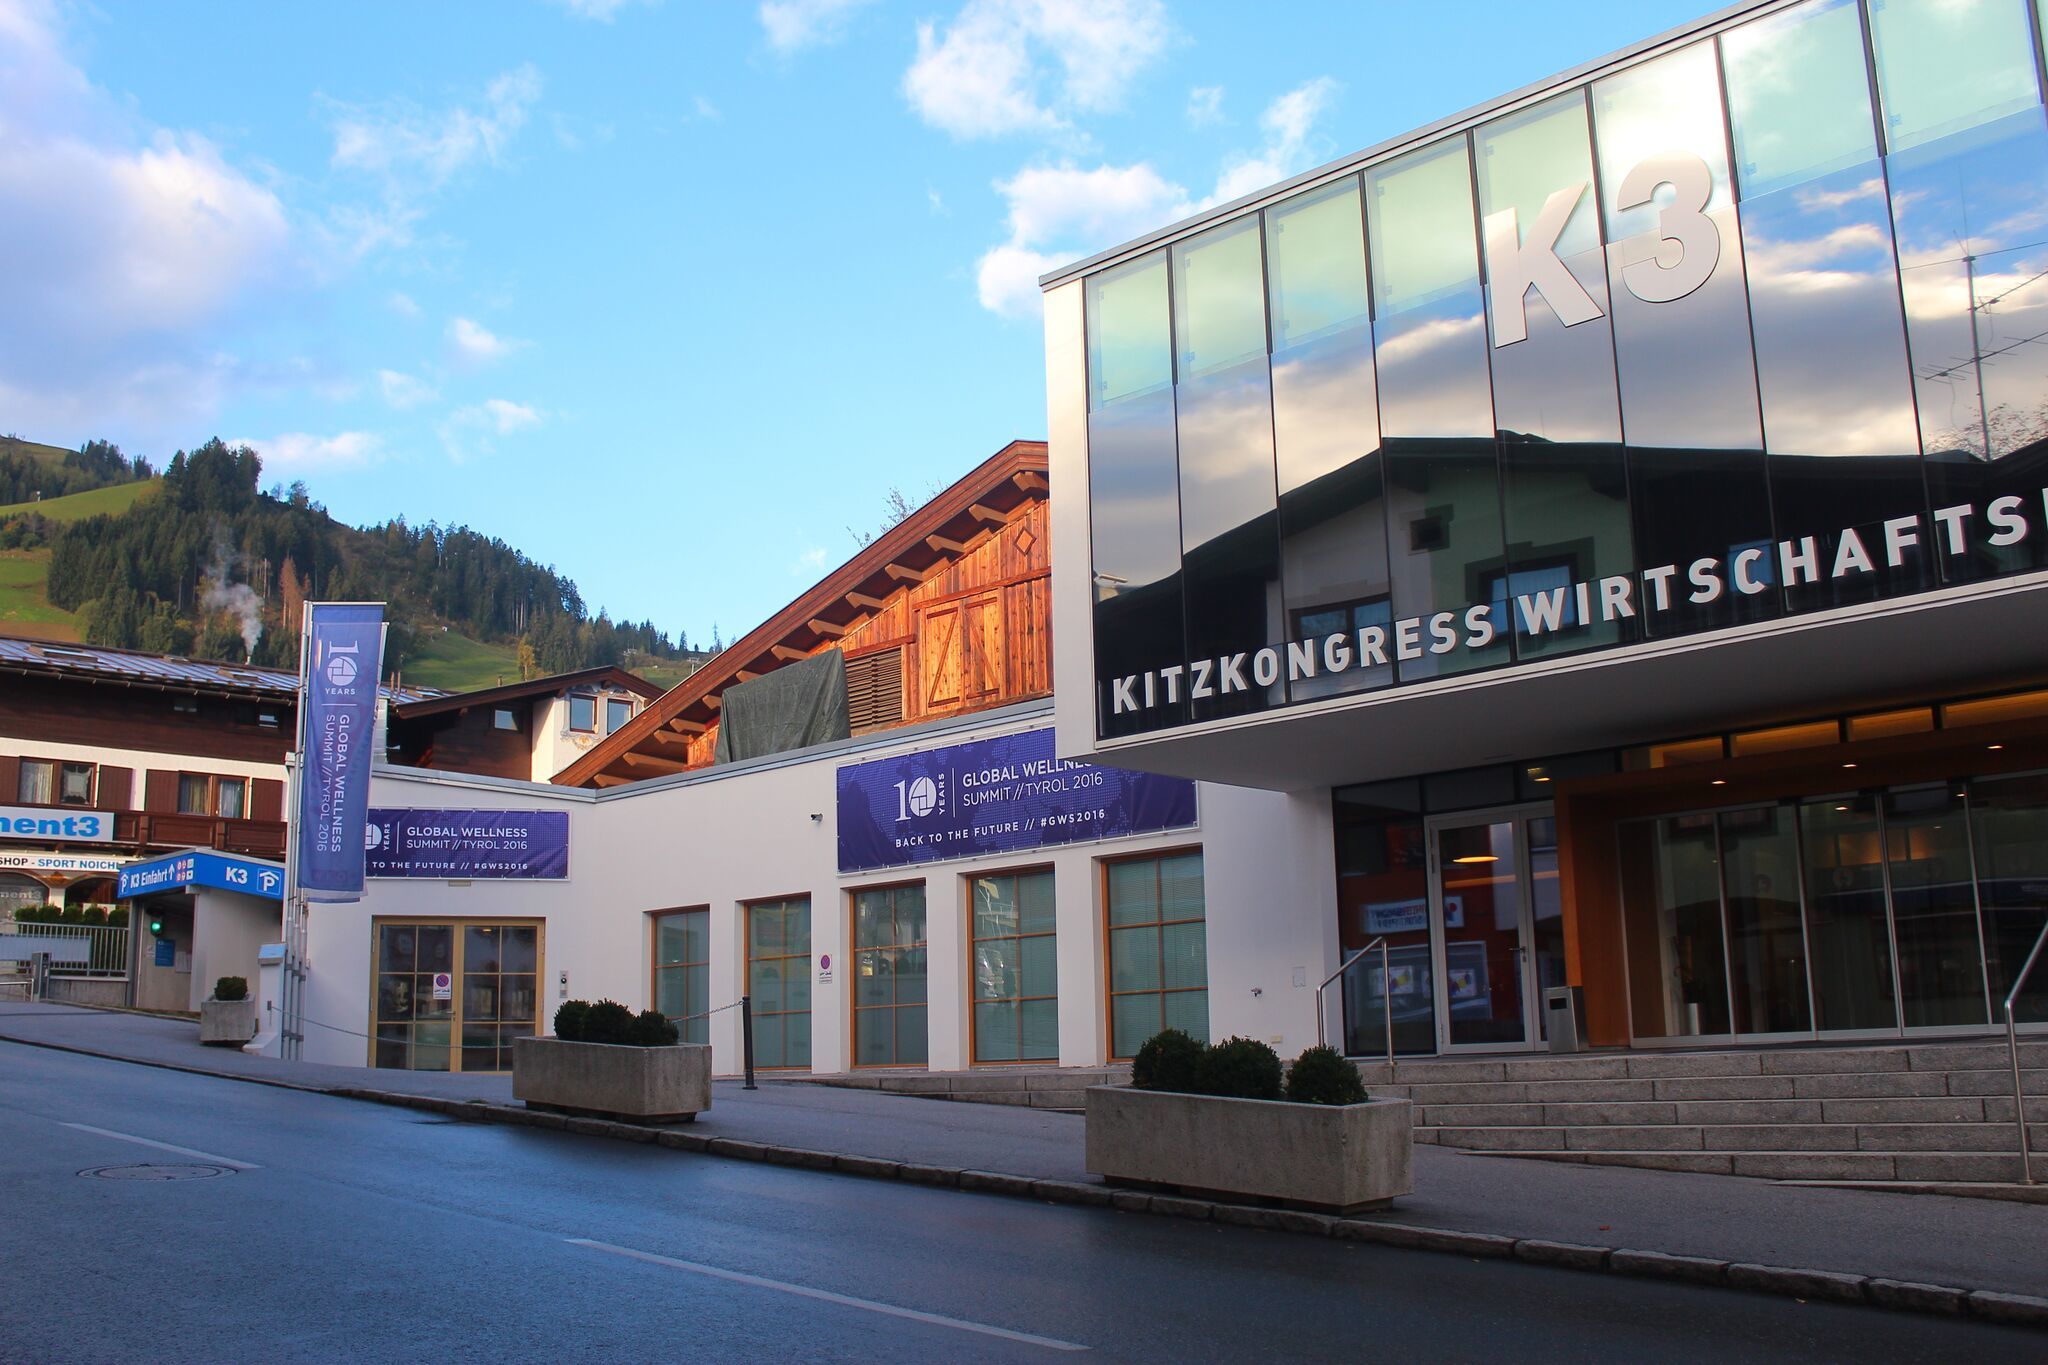 Global Wellness Summit 2016 - Gipfeltreffen in Kitzbühel